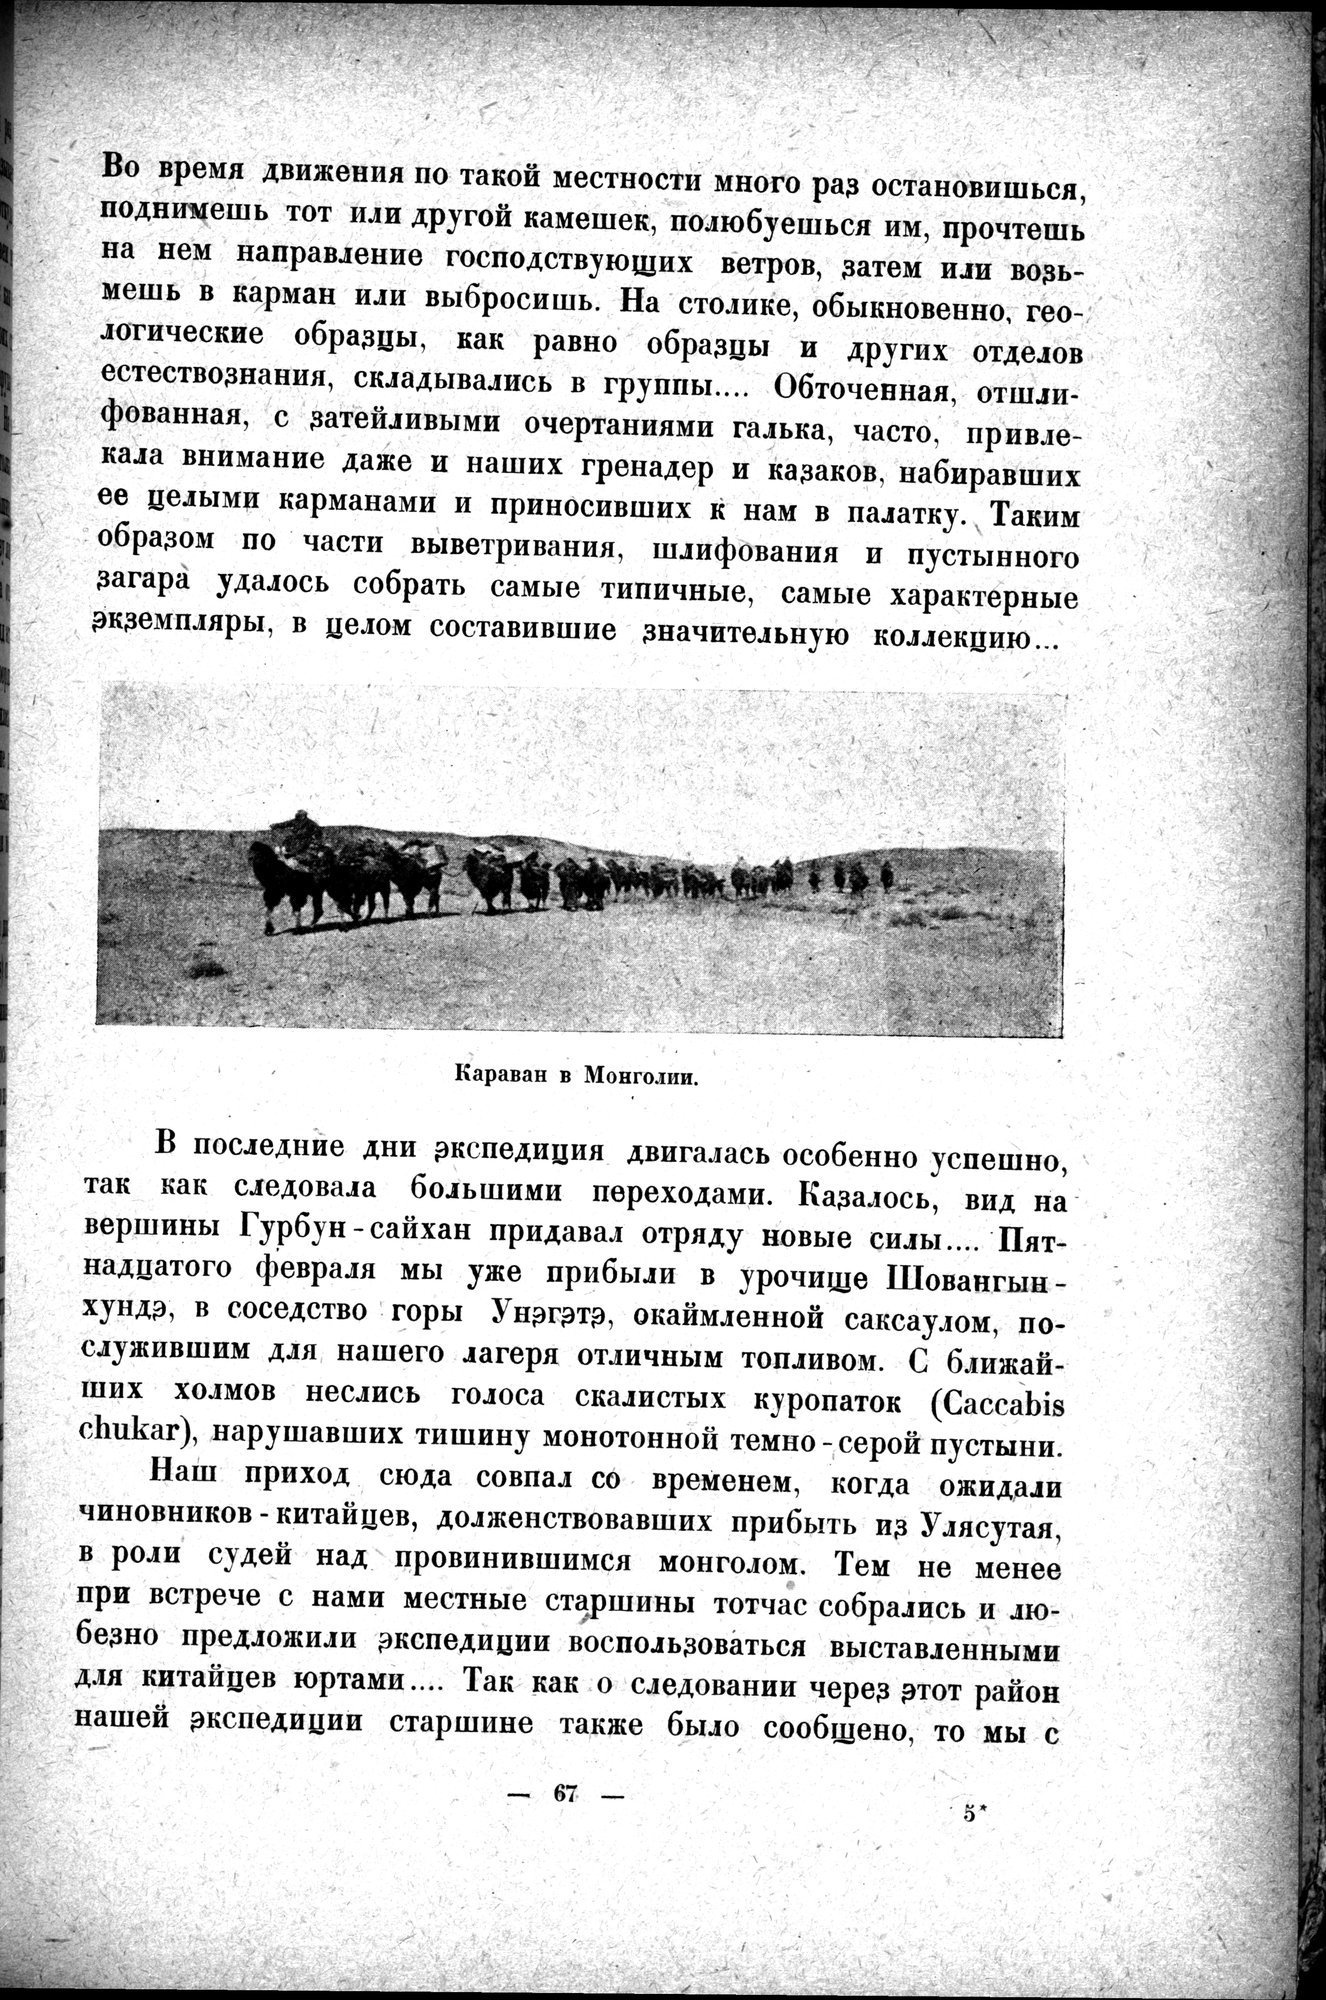 Mongoliya i Amdo i mertby gorod Khara-Khoto : vol.1 / Page 91 (Grayscale High Resolution Image)